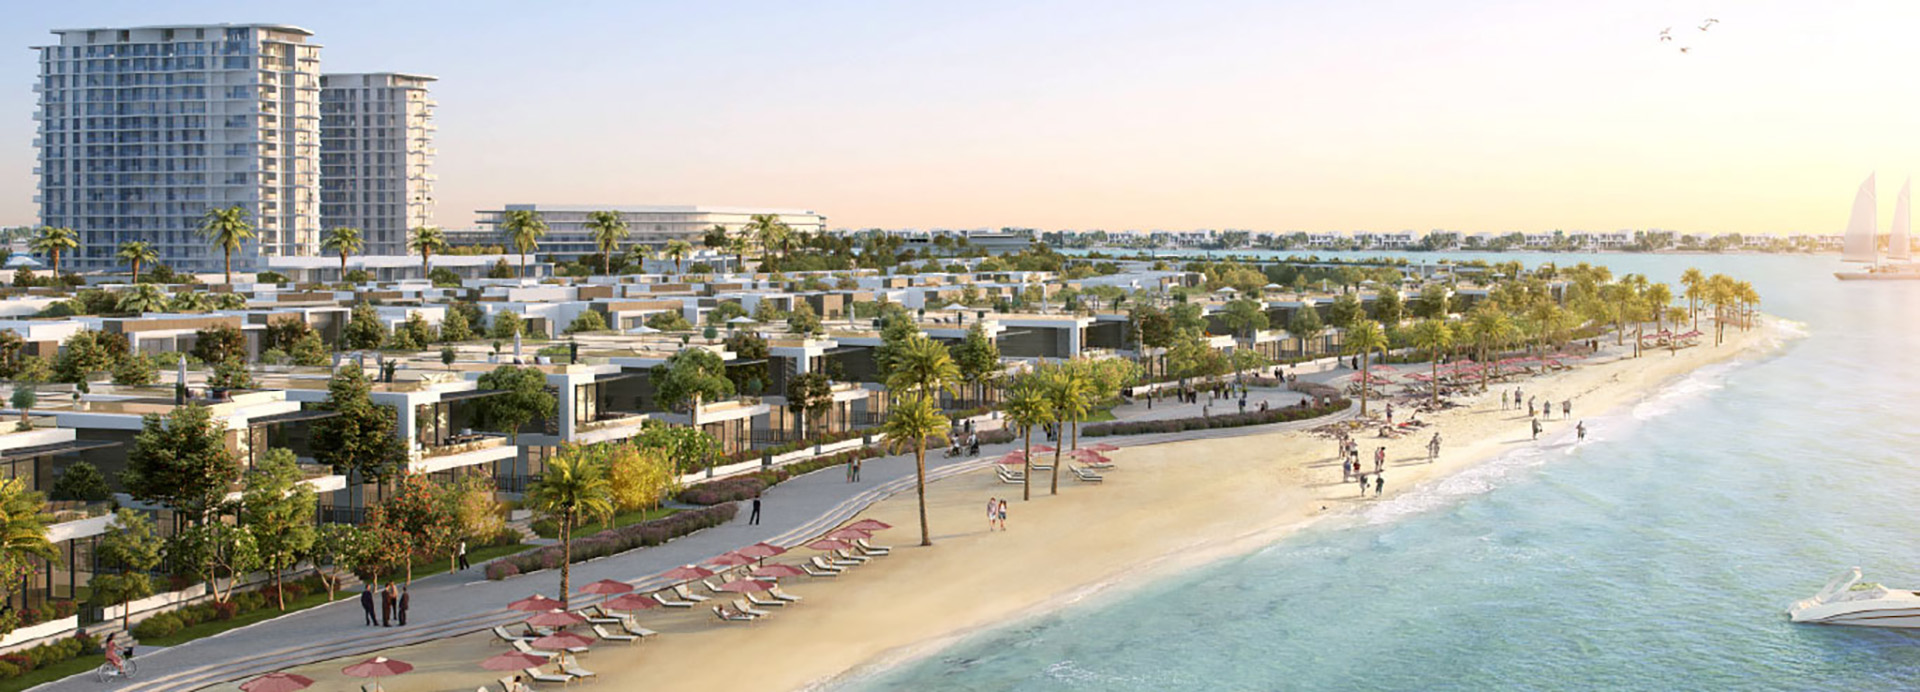 RAK Properties Bermuda Villas for Sale in Ras Al Khaimah, Mina Al Arab, UAE